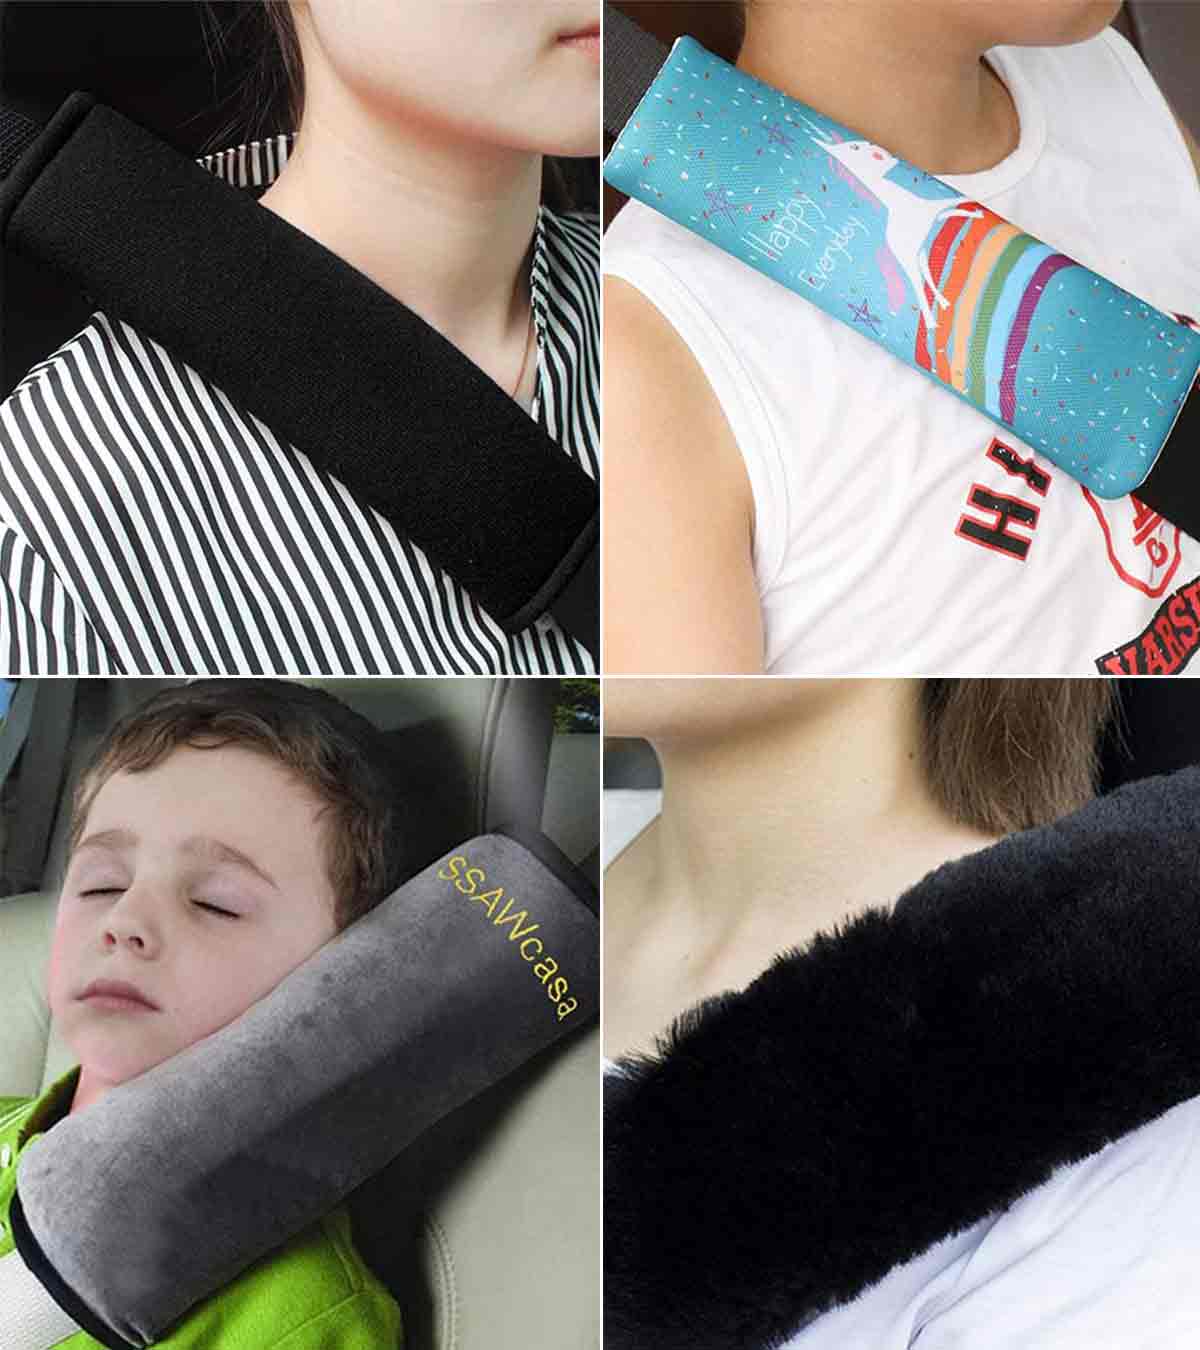 2pcs PU Fashion Car Seat Belt Cover Car Seat belt shoulder Pads